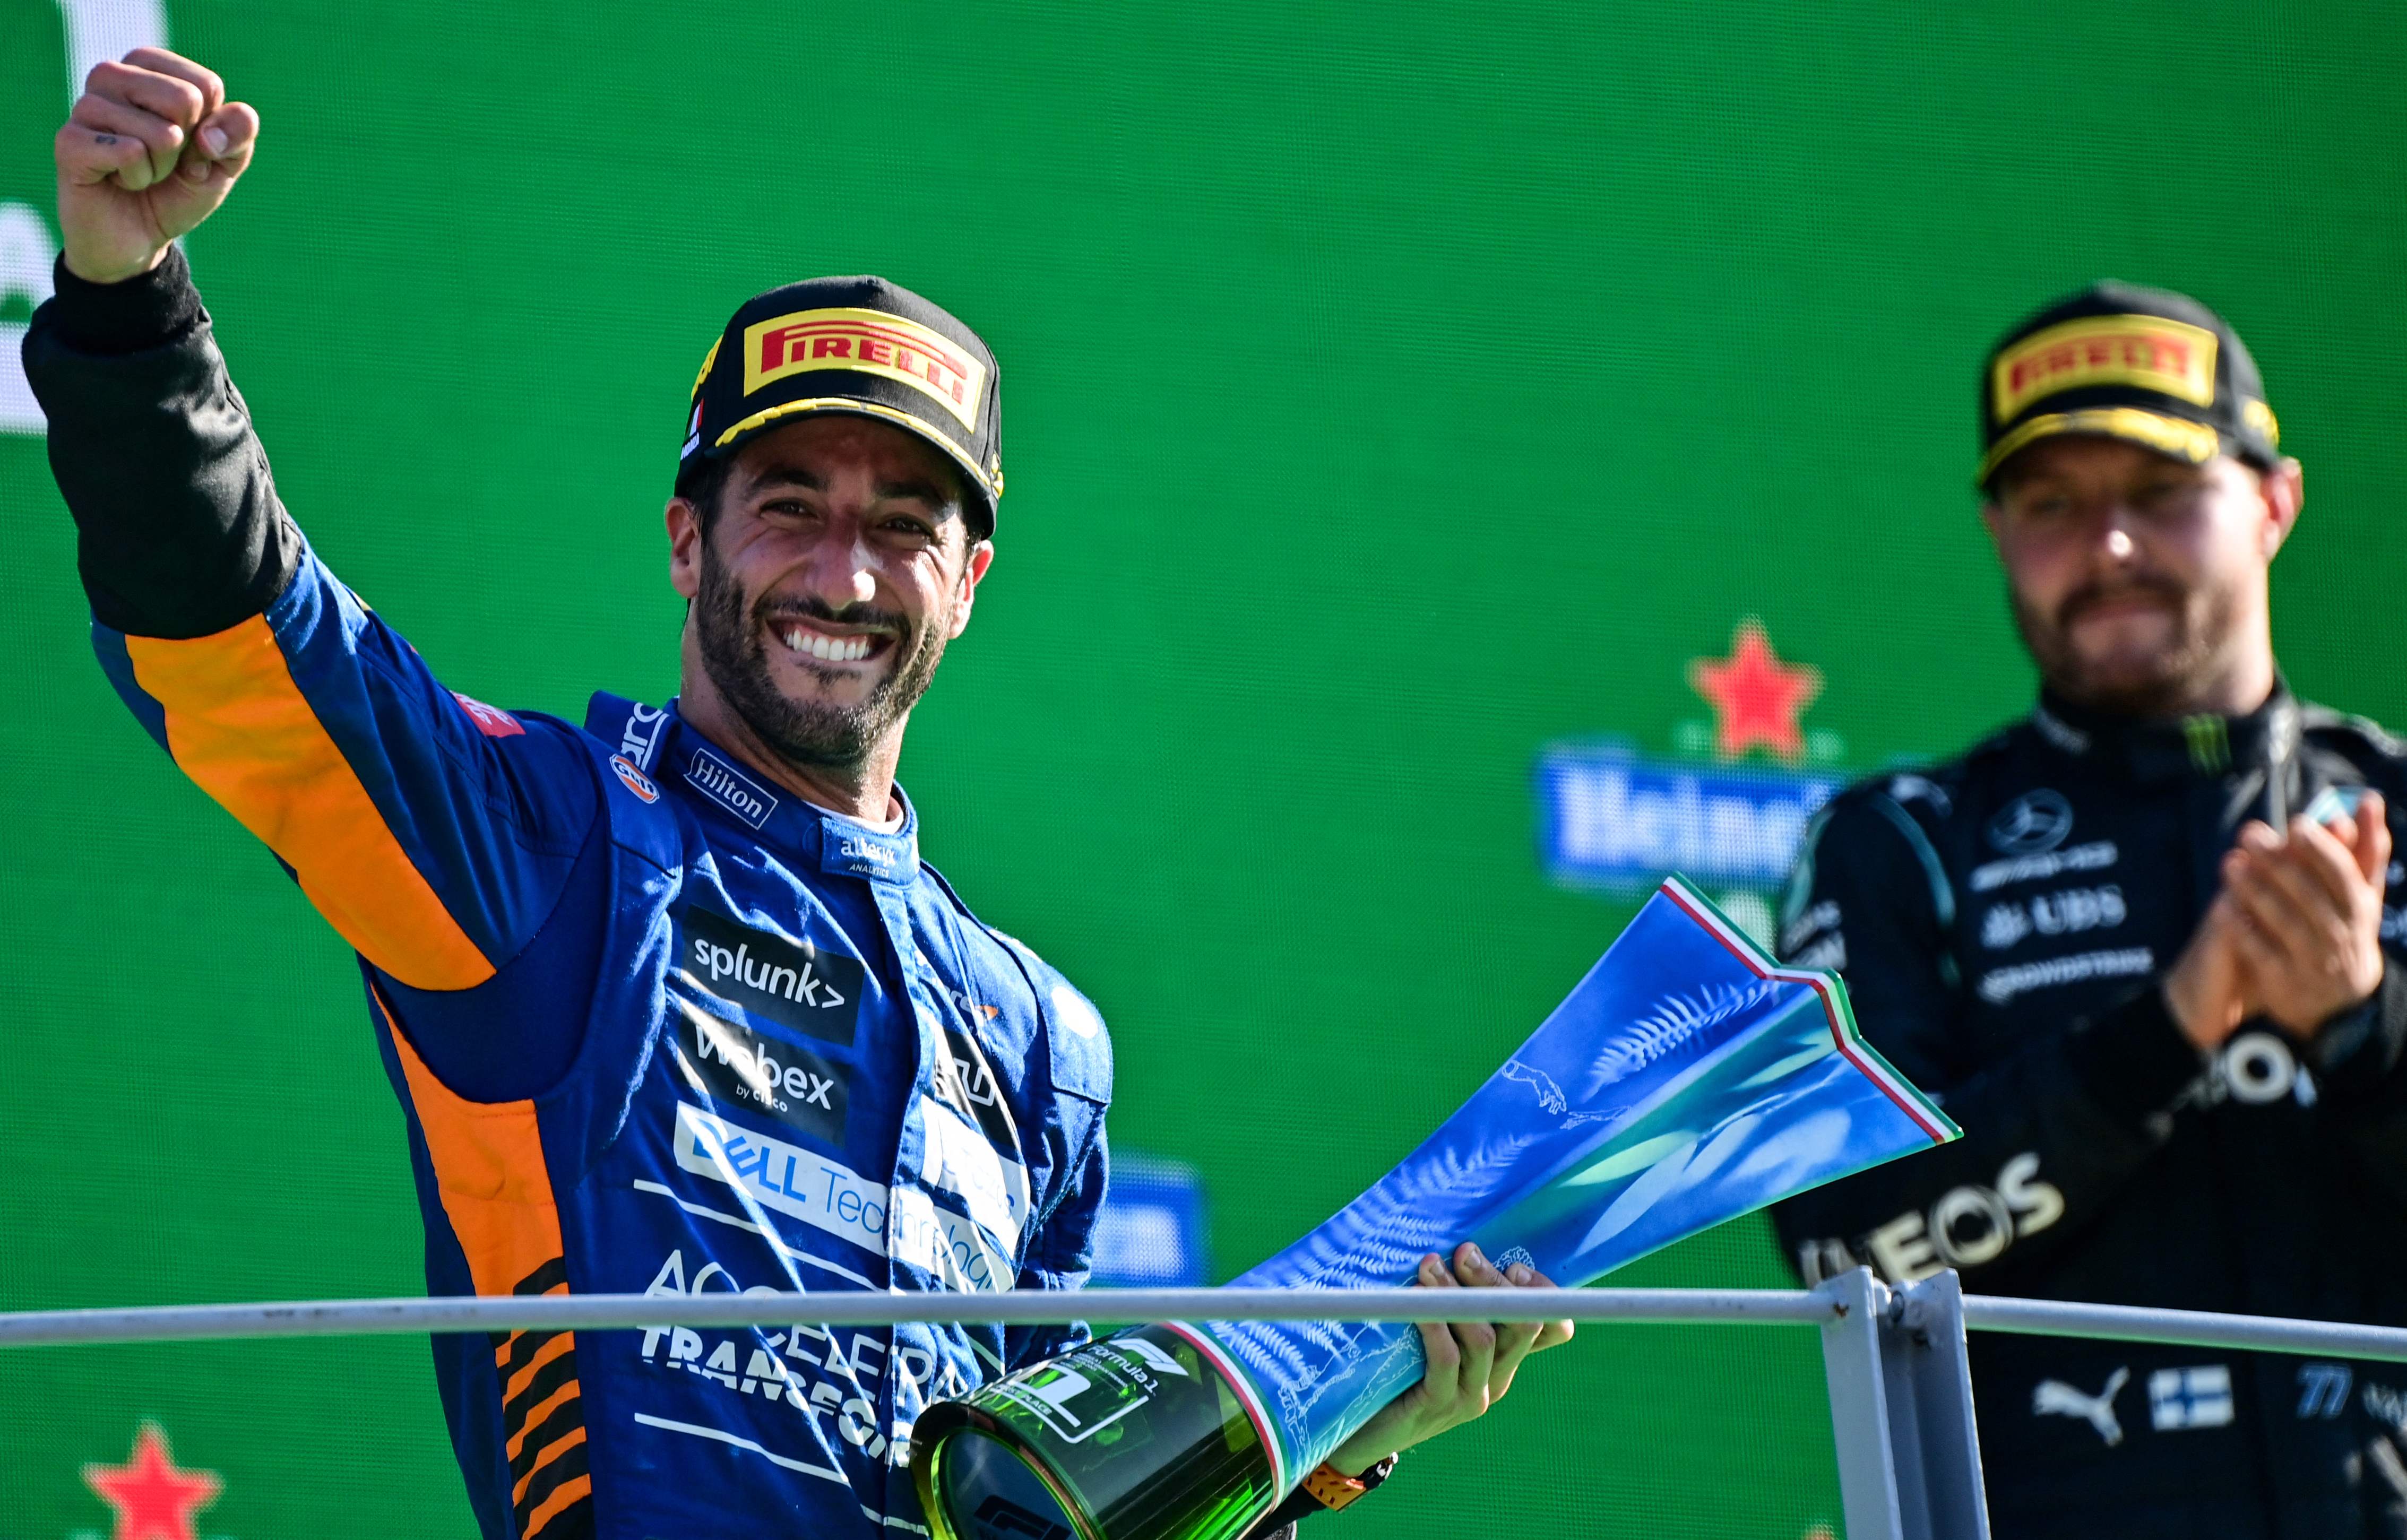 El piloto de McLaren Daniel Ricciardo junto al tercer lugar de Mercedes Valtteri Bottas festejan en el podio después del Grand Prix italiano. (Foto Prensa Libre: AFP)